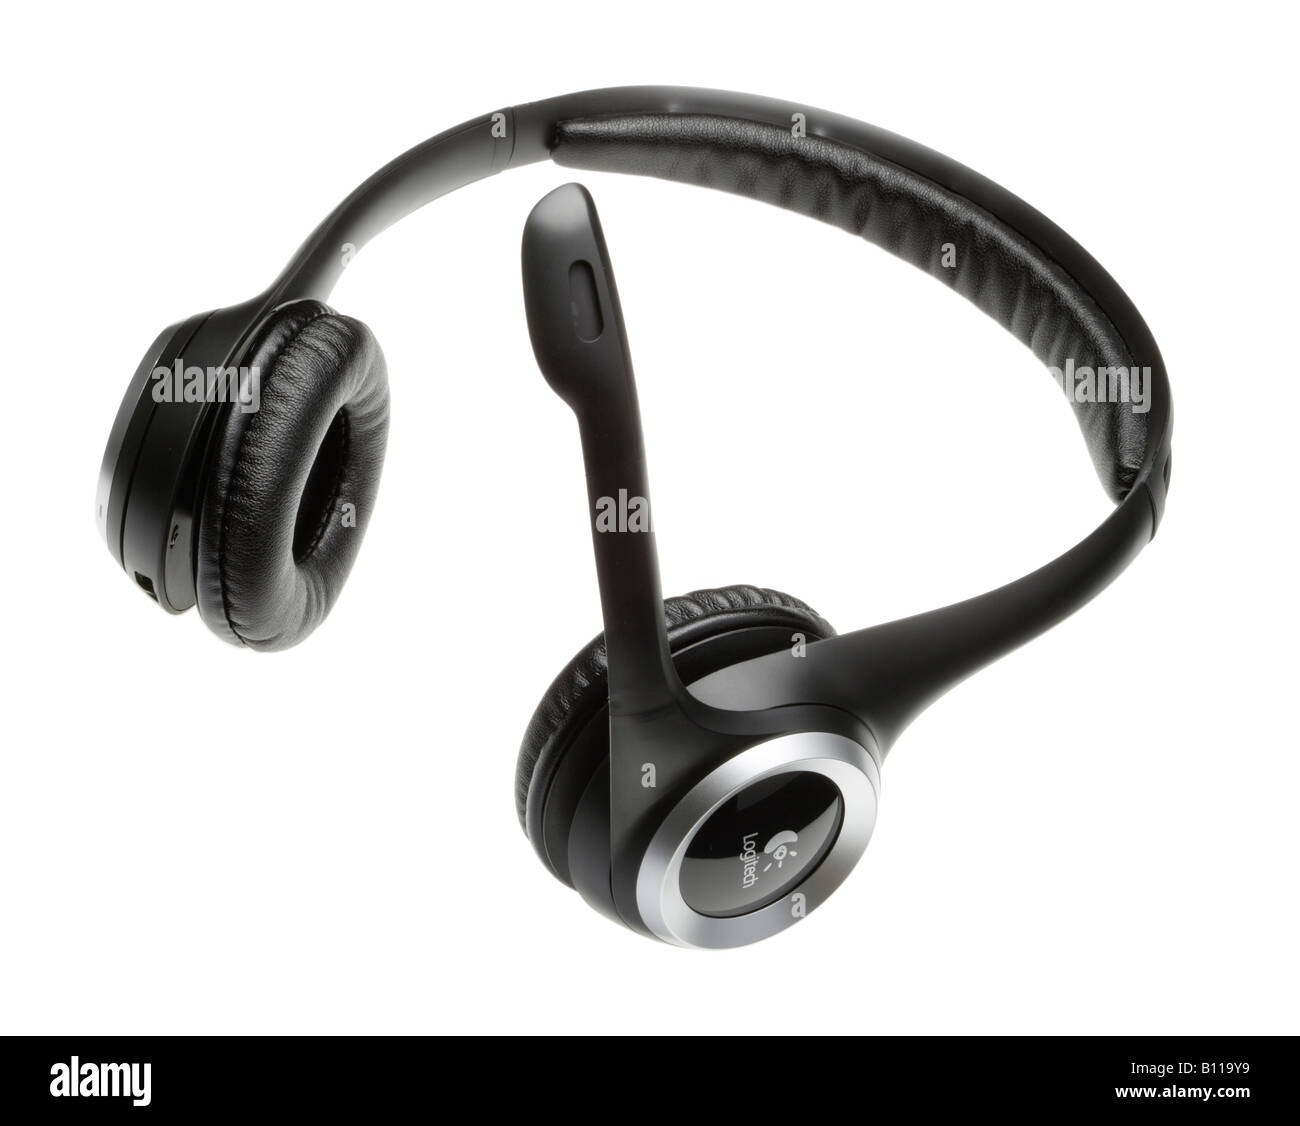 Headphones and microphone headset Stock Photo